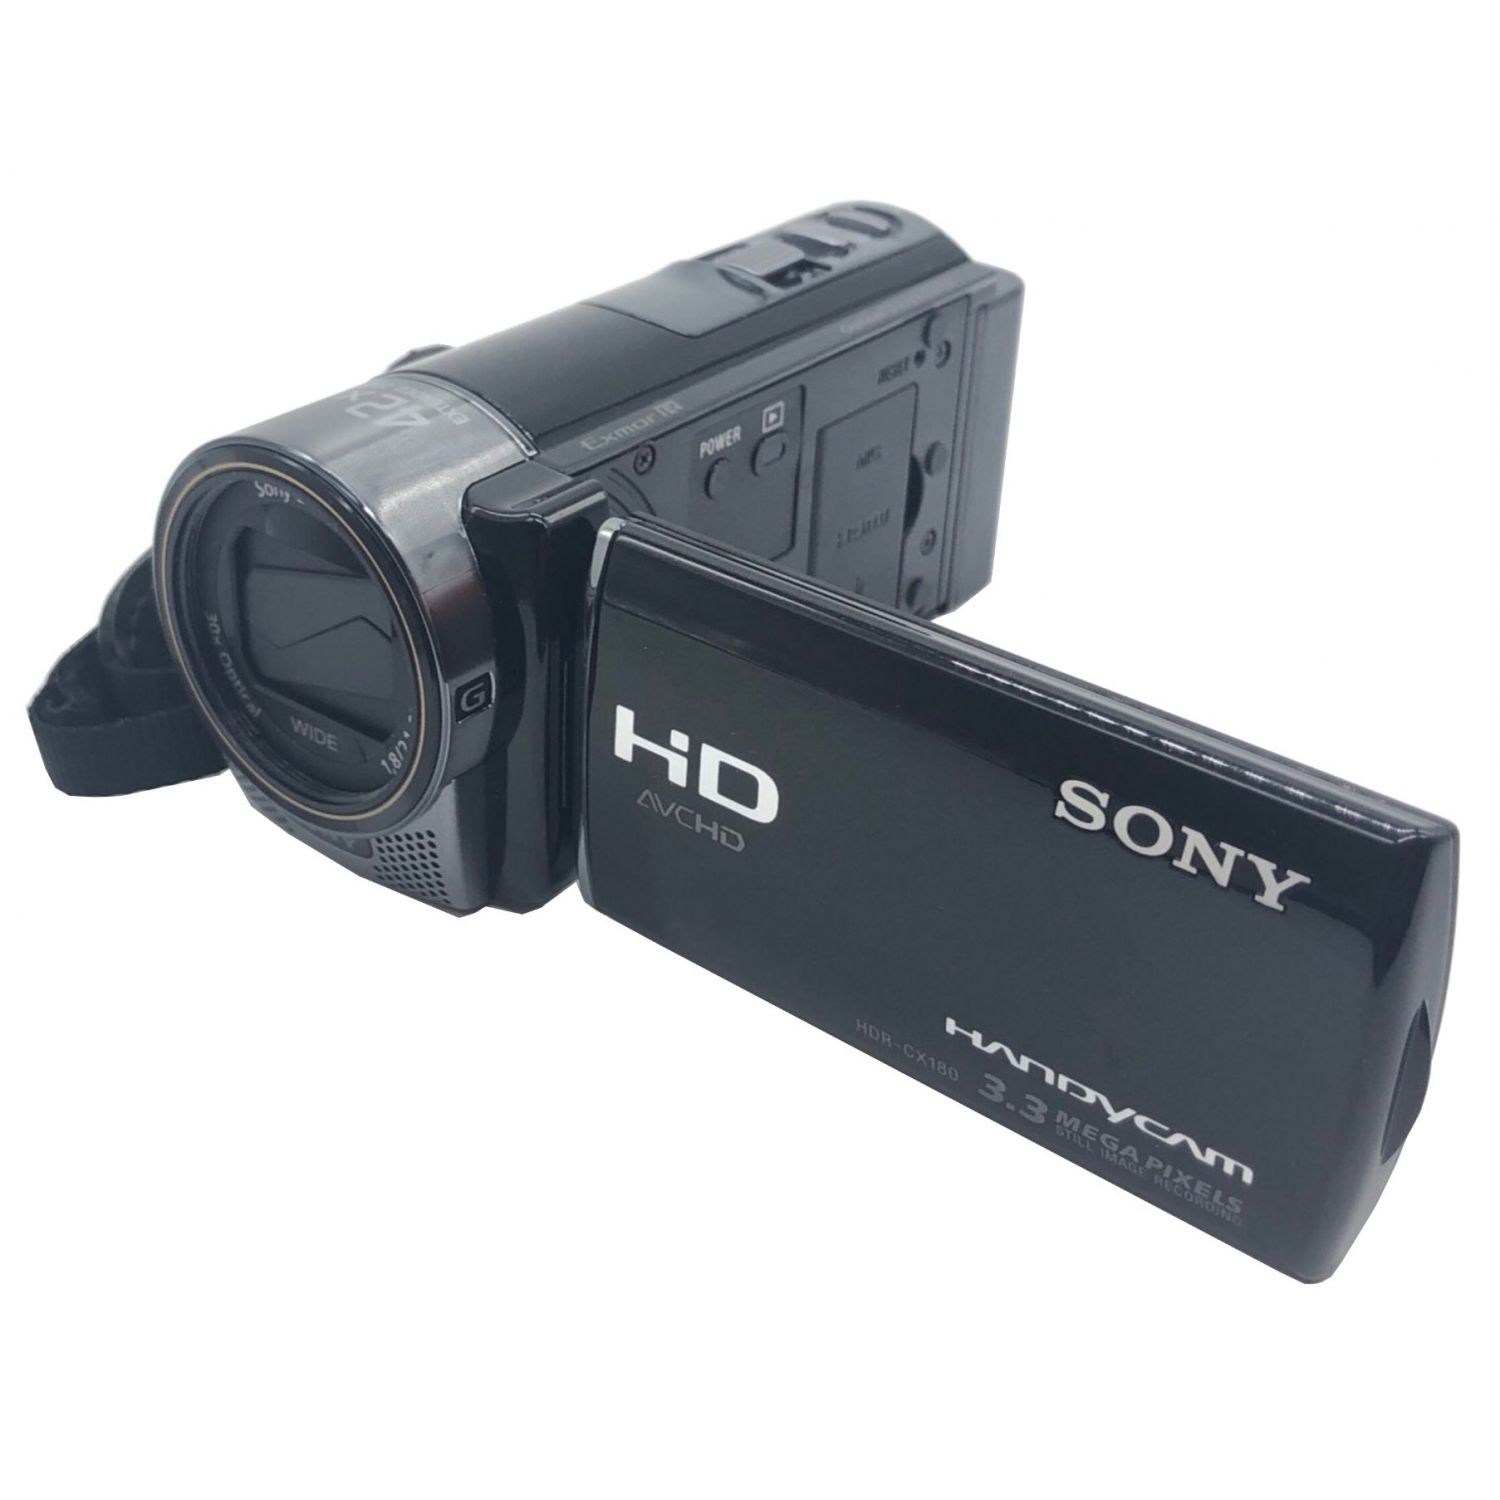 SONY (ソニー) デジタルビデオカメラ 動画149万画素 32GB HDR-CX180